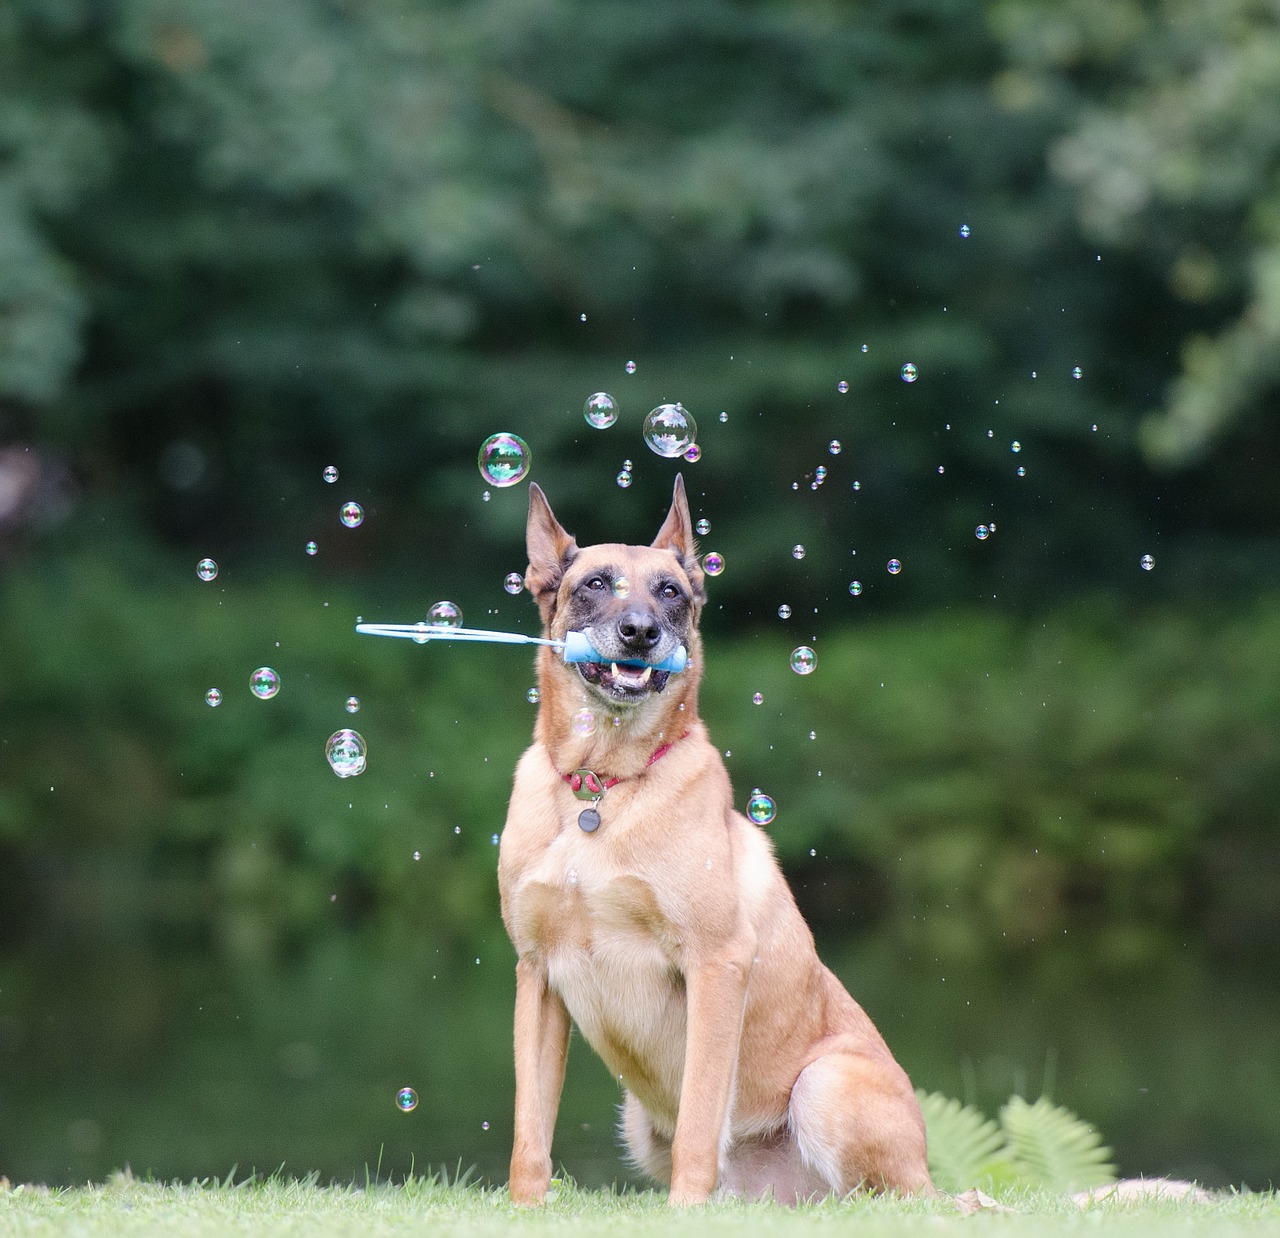 soap bubbles dog trick dog shows a trick free photo